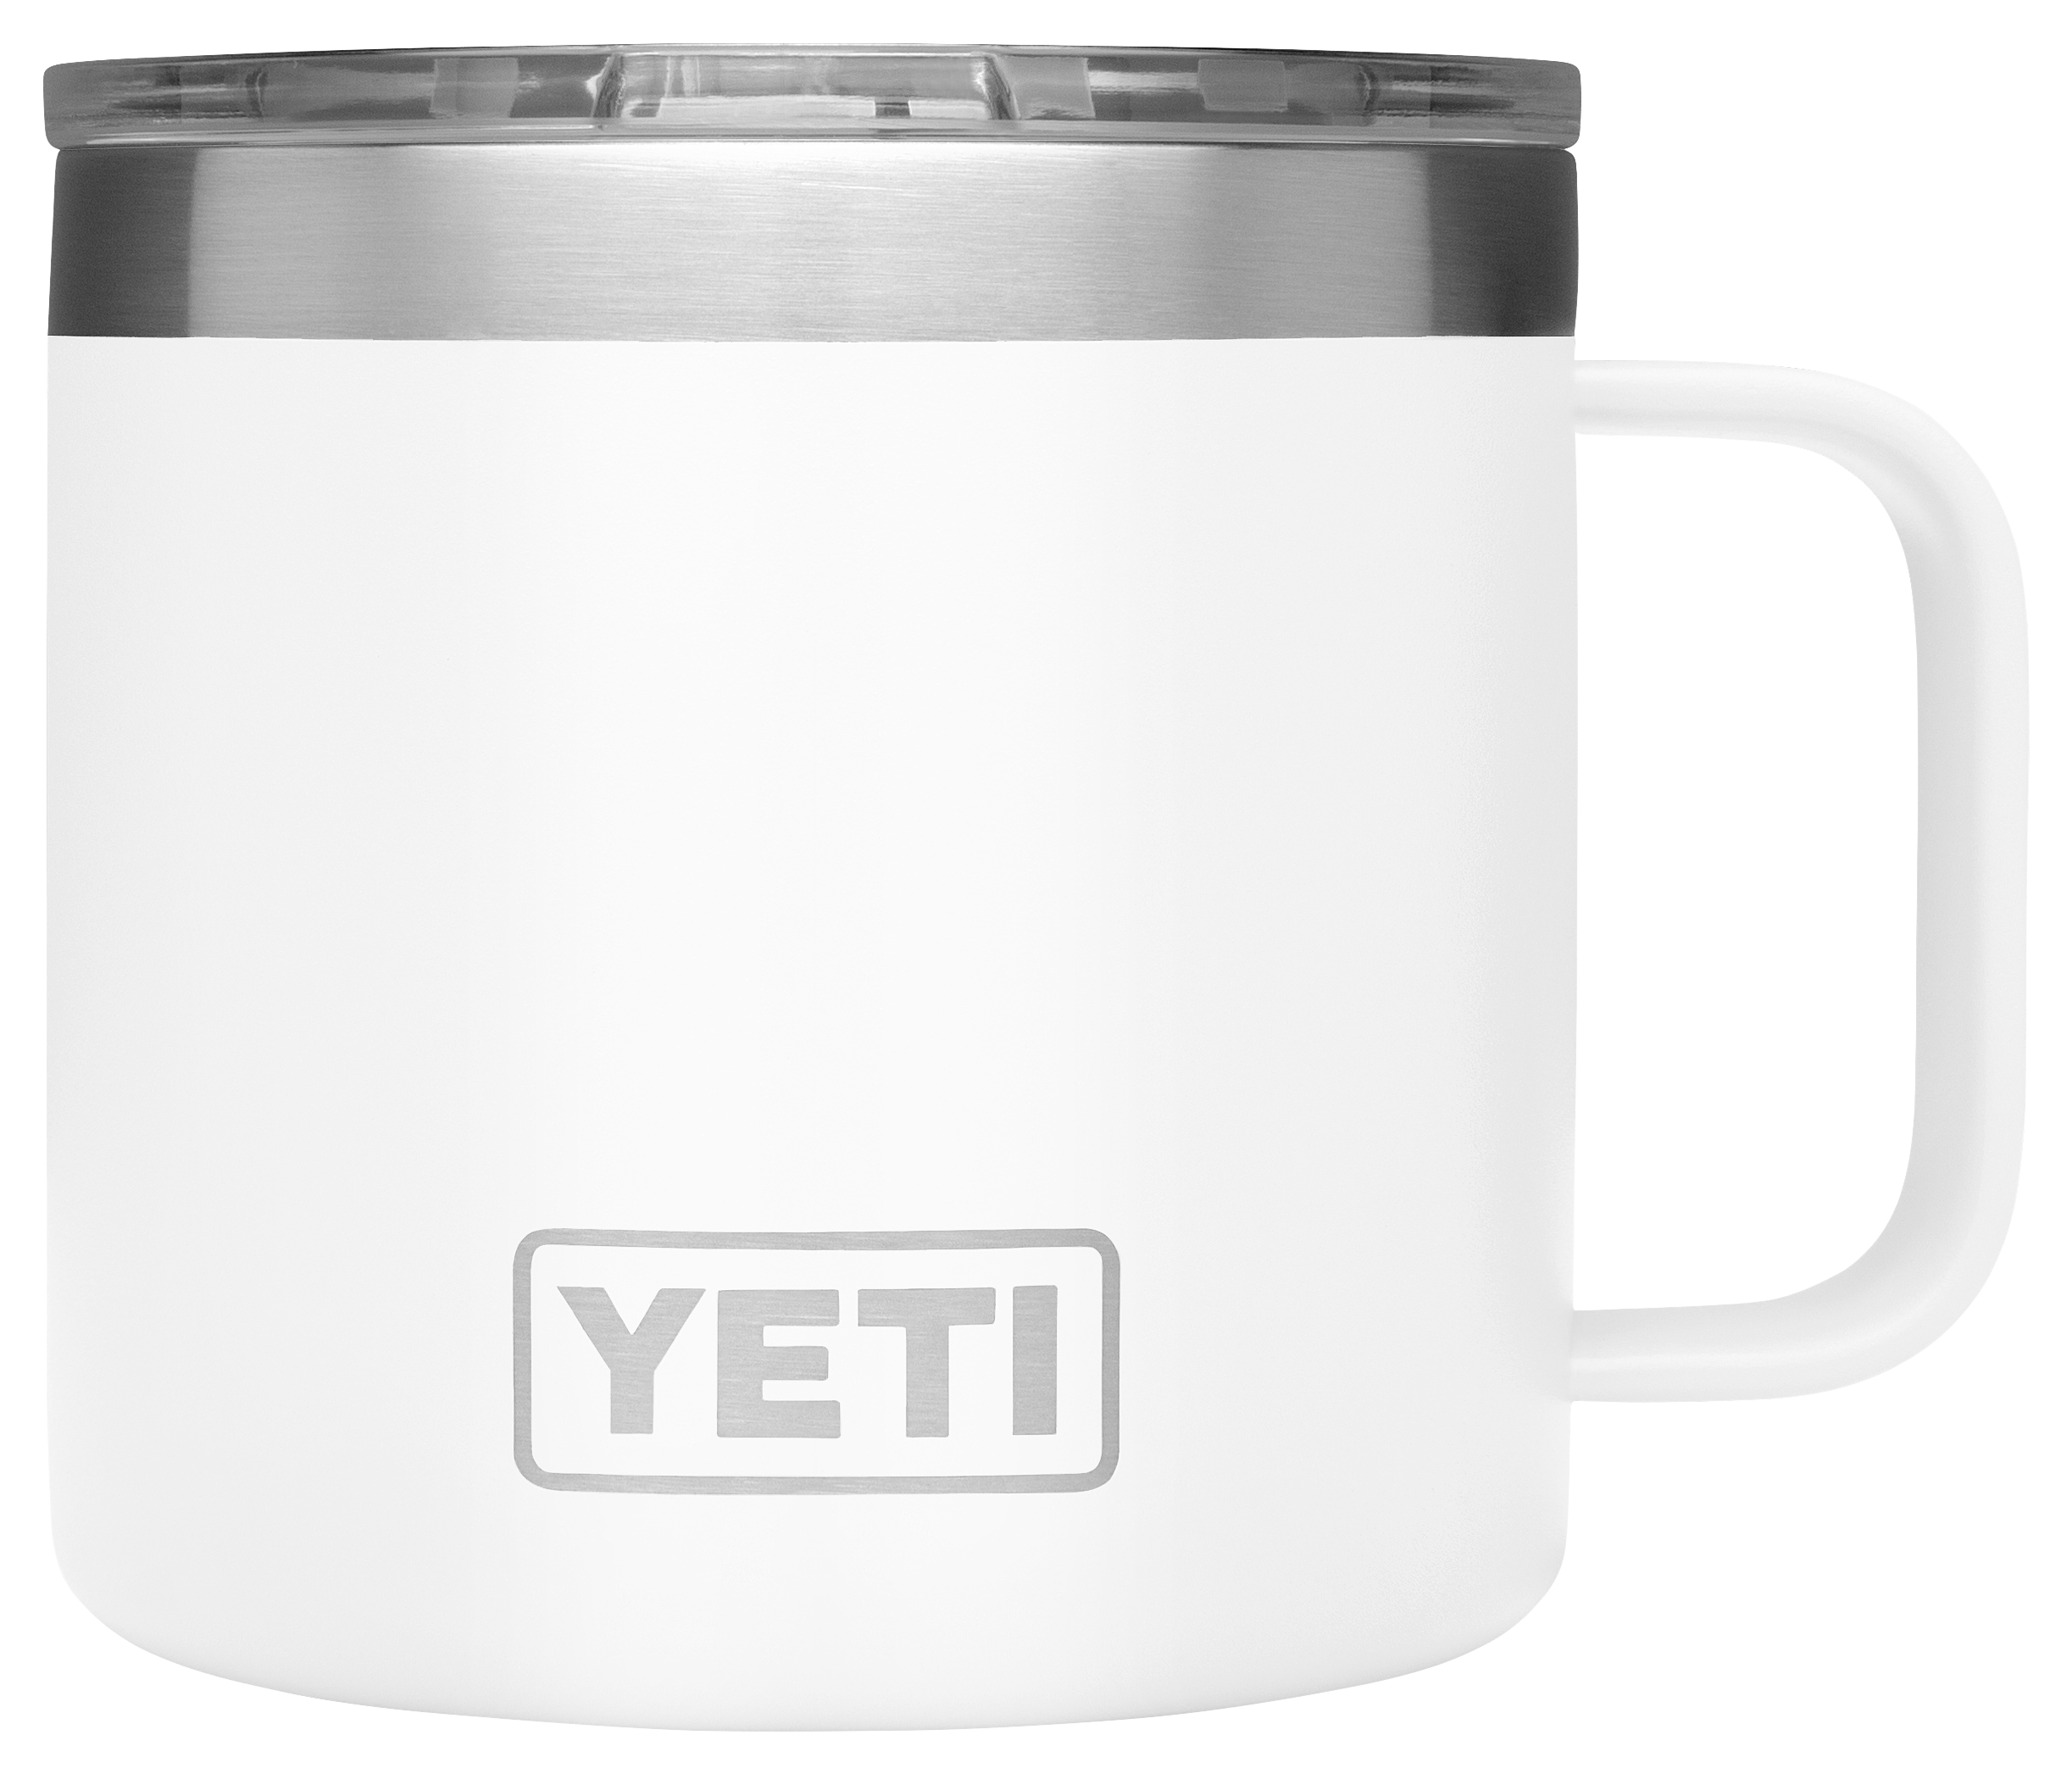 Identify Diagnostics YETI Coffee Mug with Lid - 14 OZ